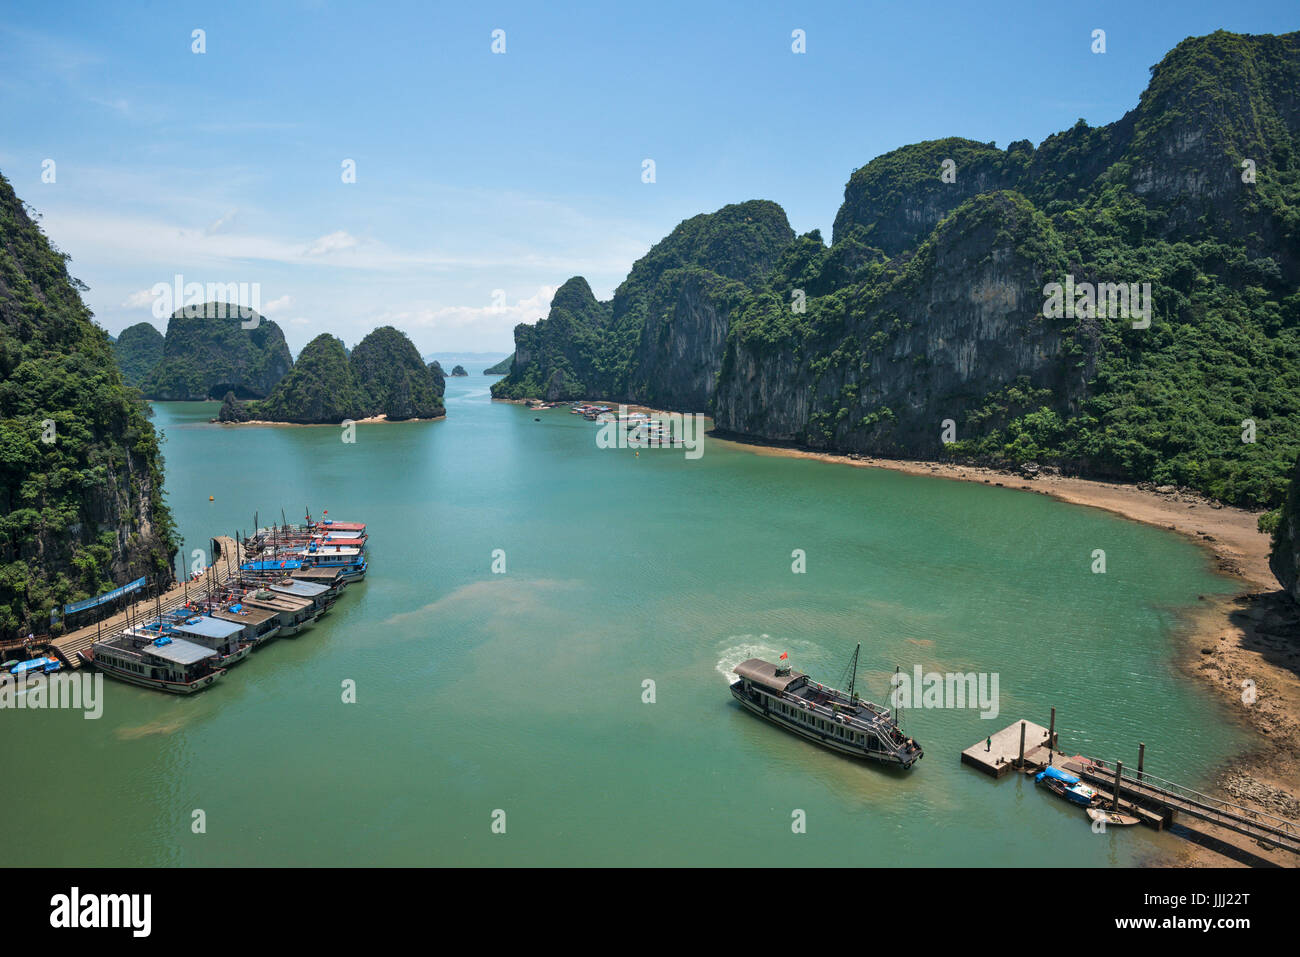 Scenic view of Halong Bay and boat cruising, Vietnam. Stock Photo